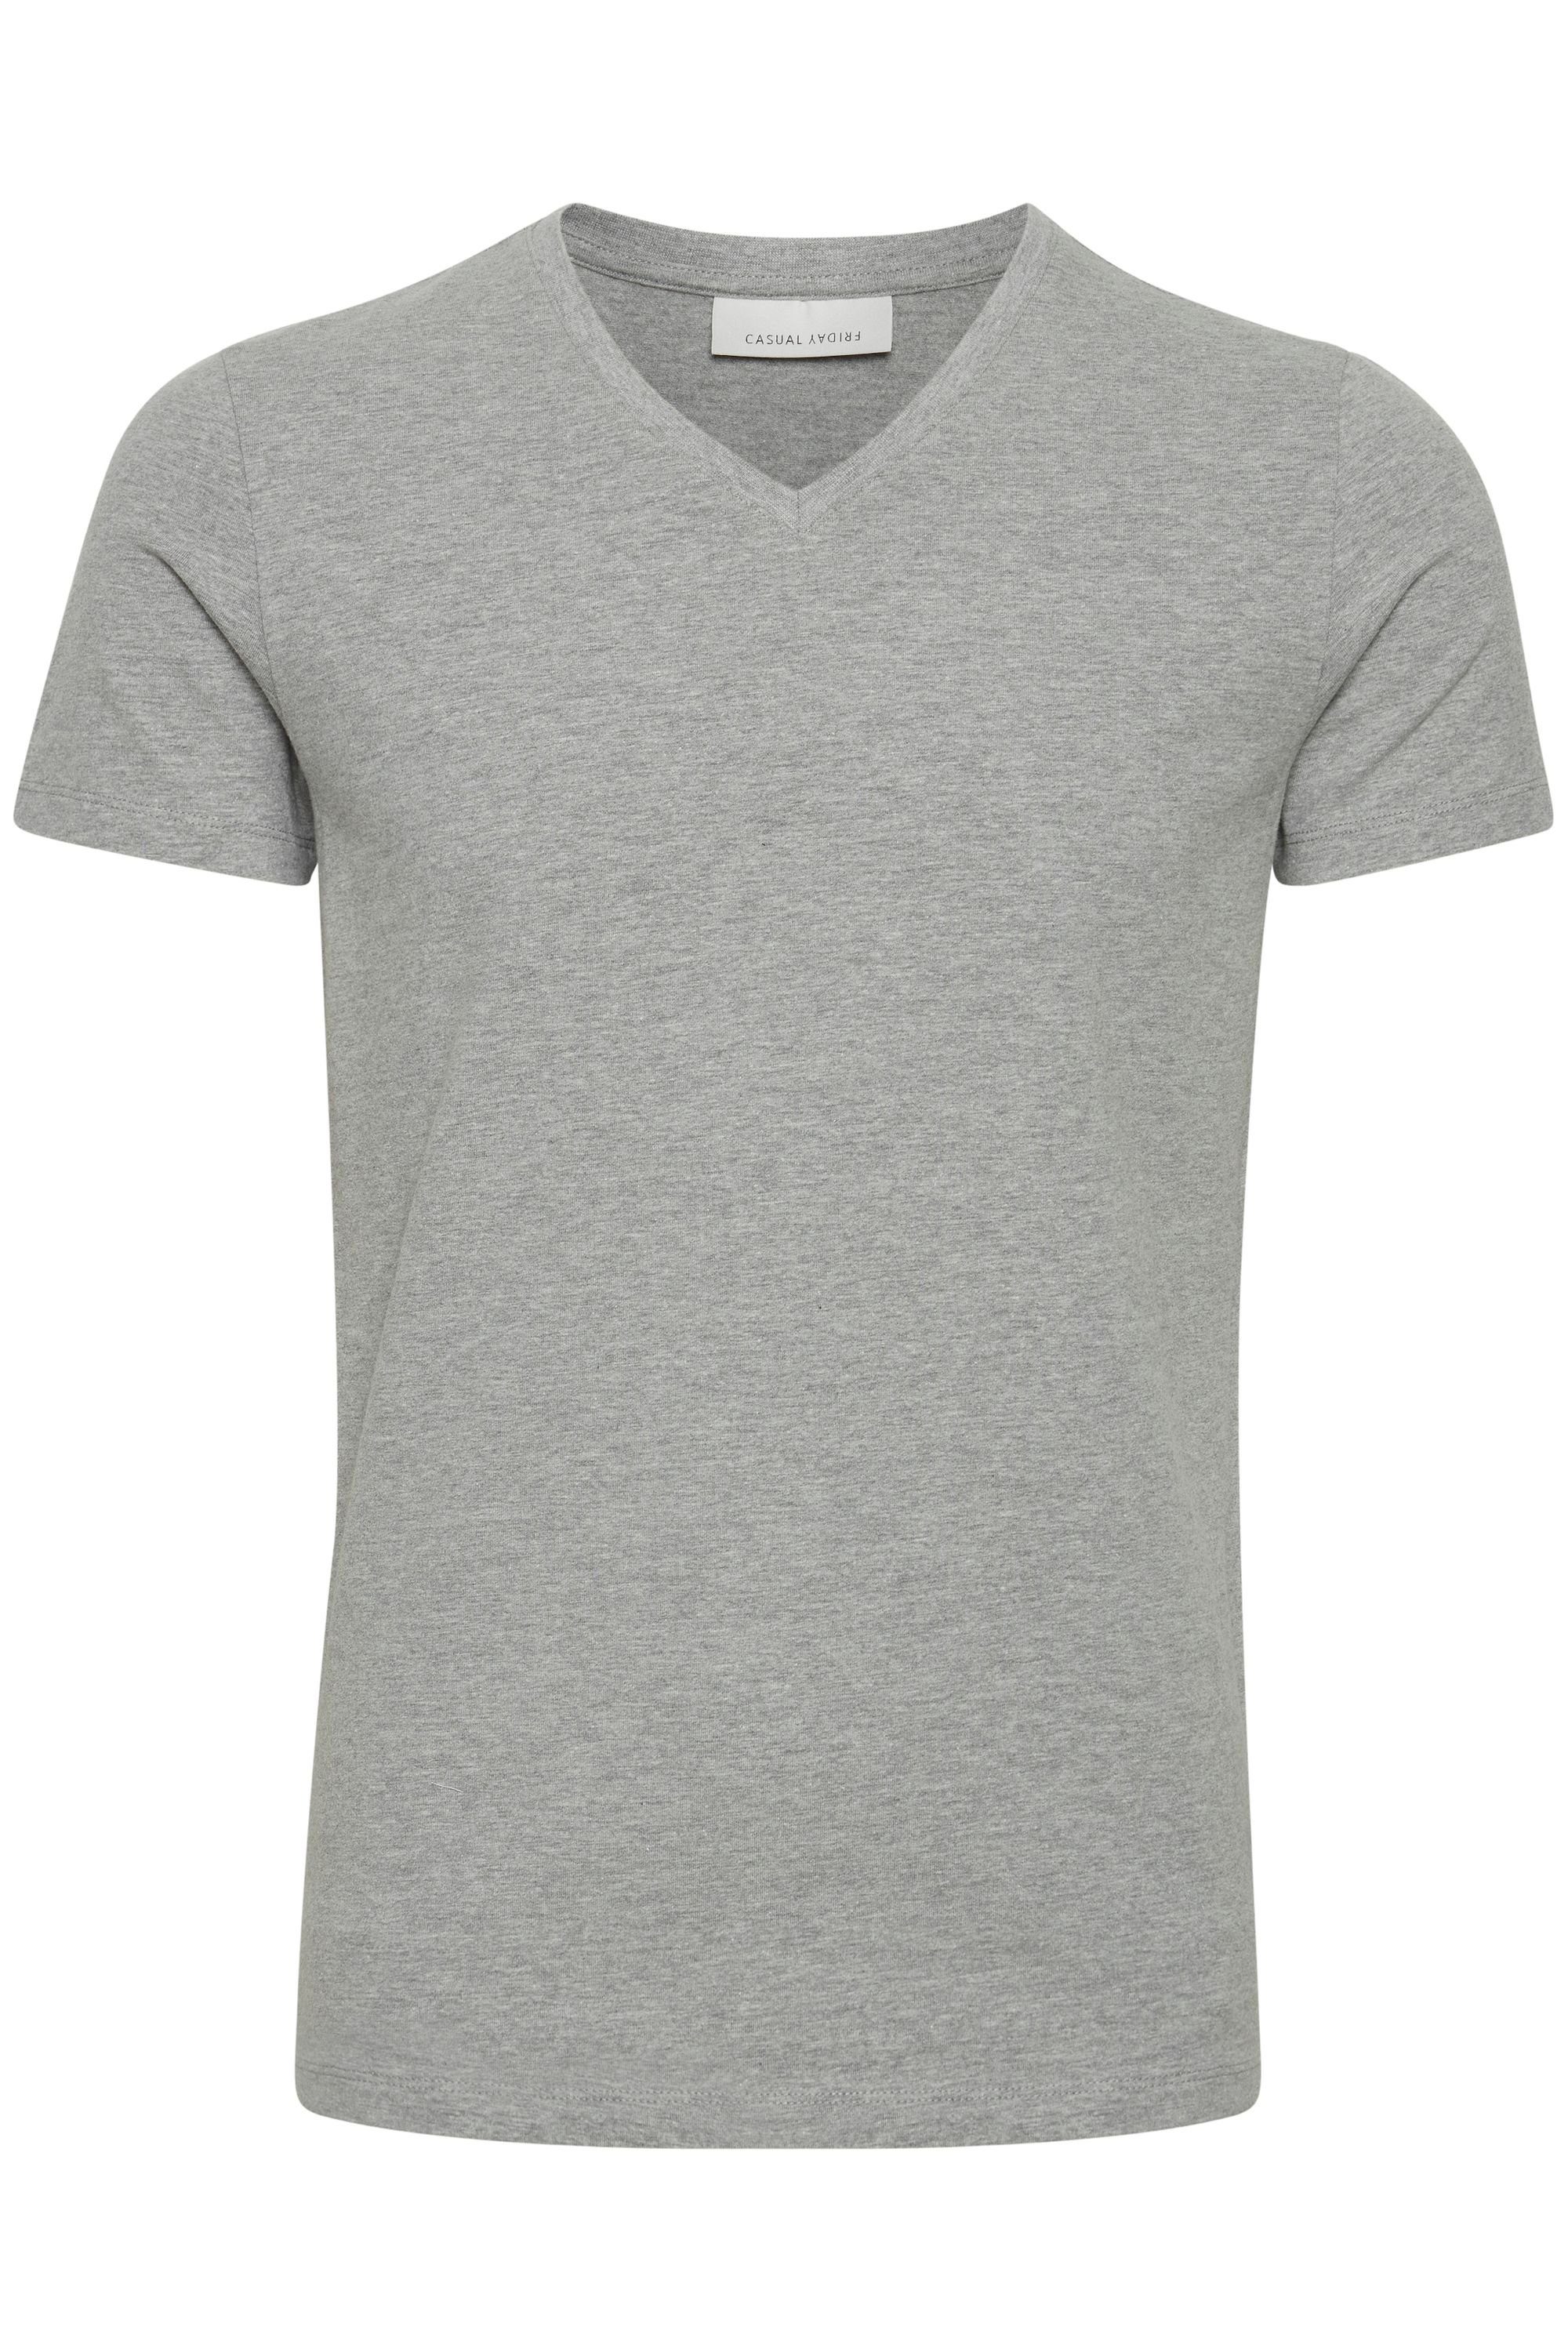 Light 20503062 - Casual Friday grey T-Shirt (50813) CFLincoln melange